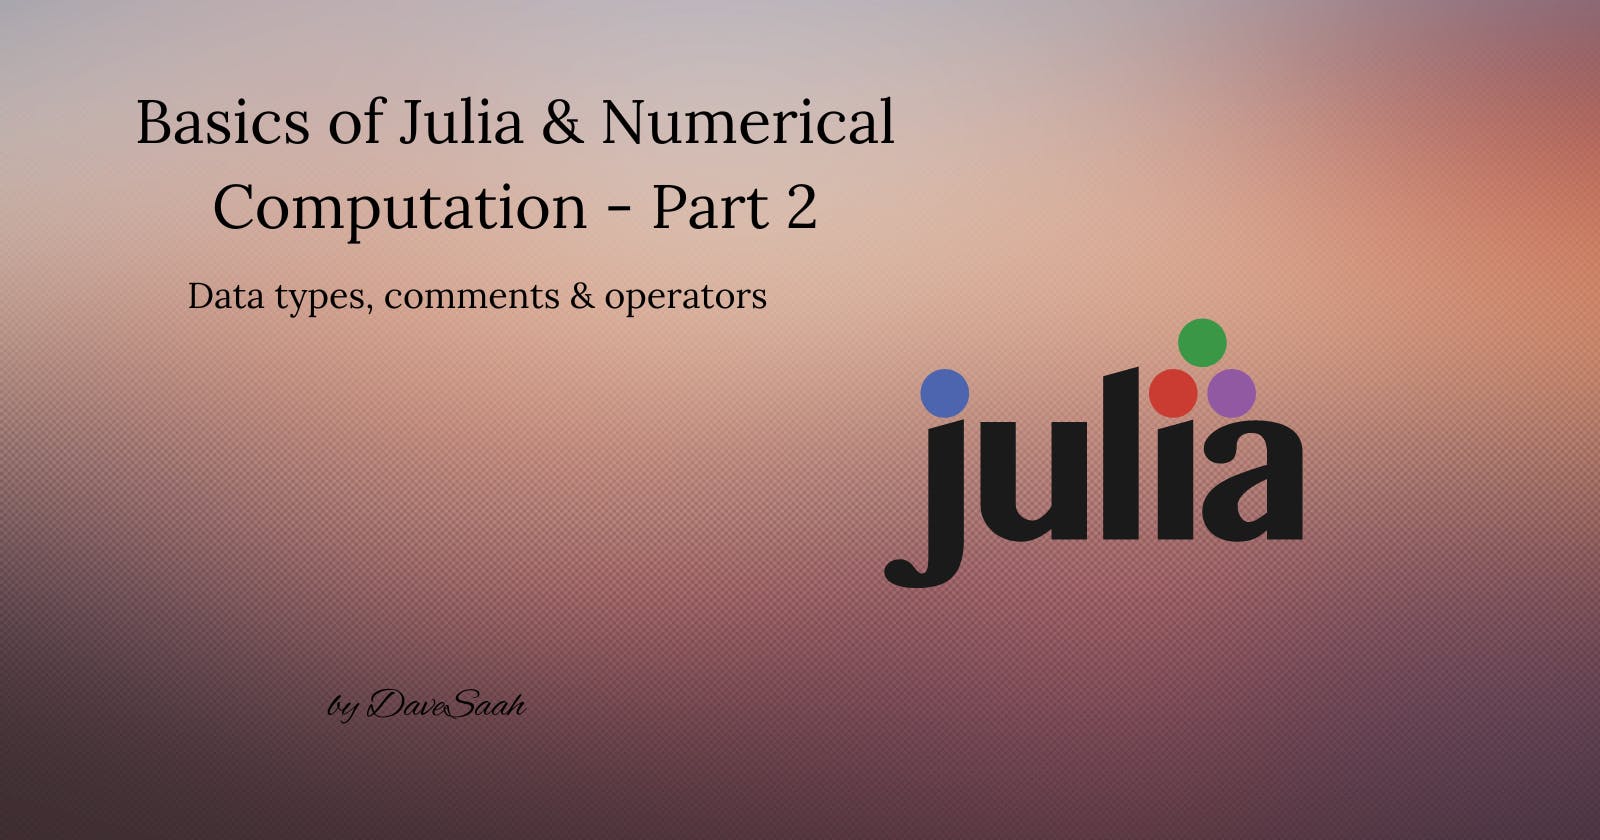 Basics of Julia & Numerical Computation Part 2